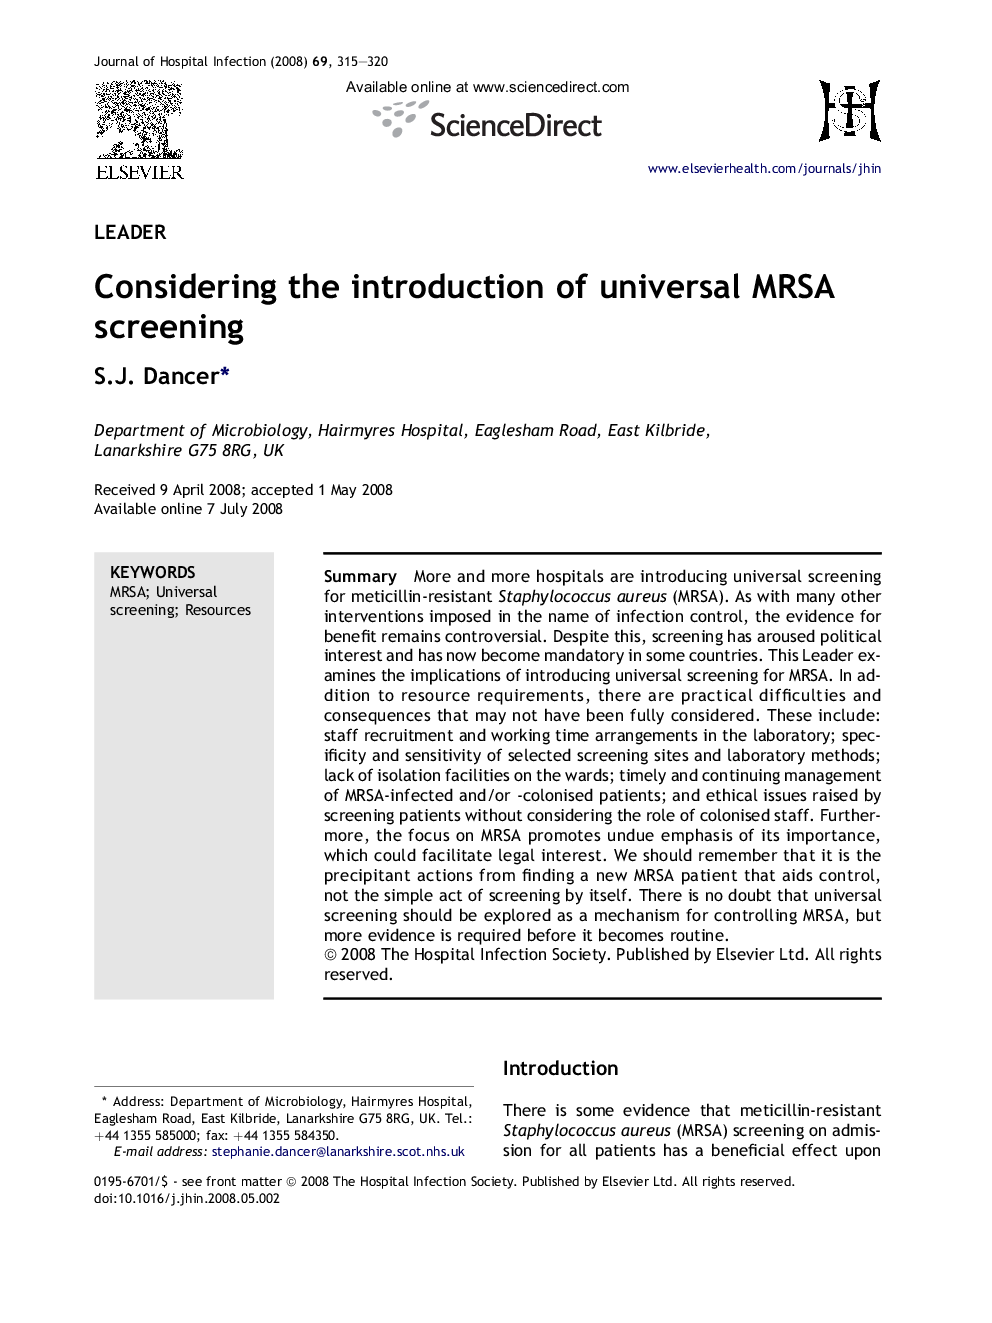 Considering the introduction of universal MRSA screening